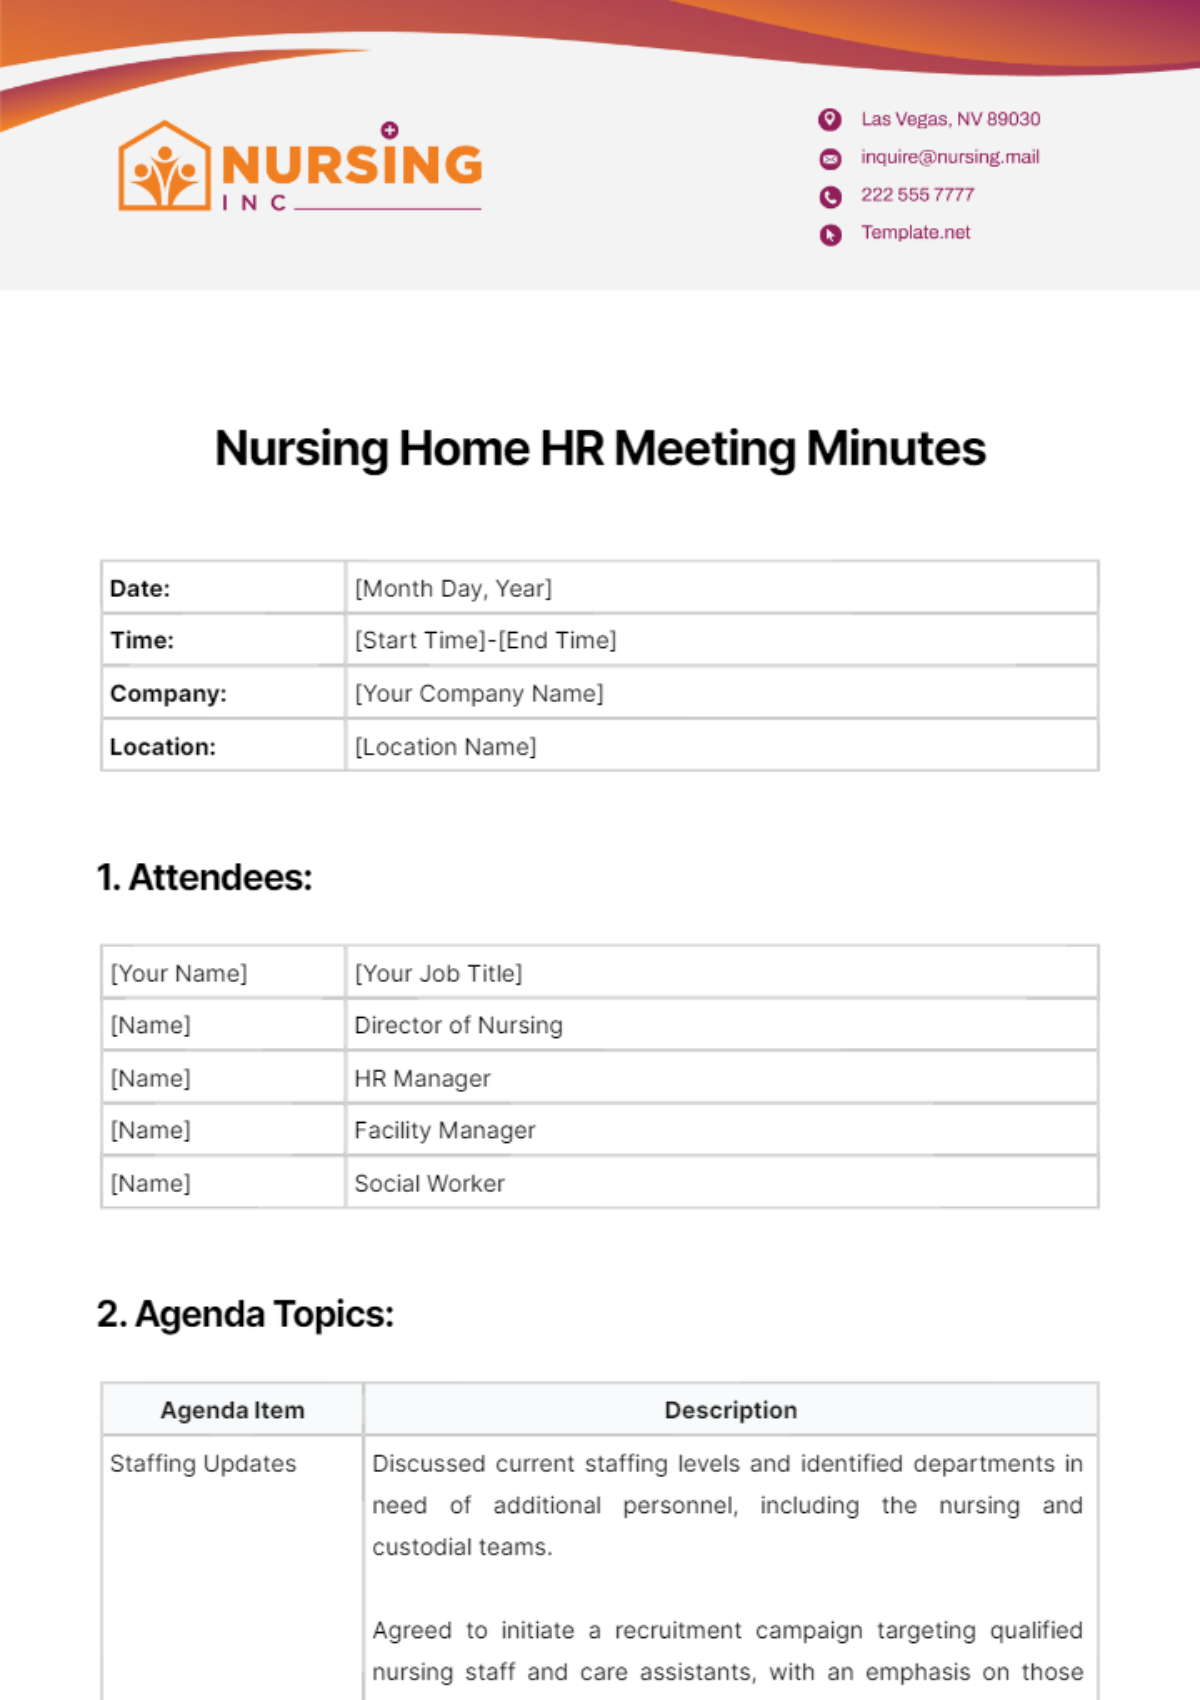 Nursing Home HR Meeting Minutes Template